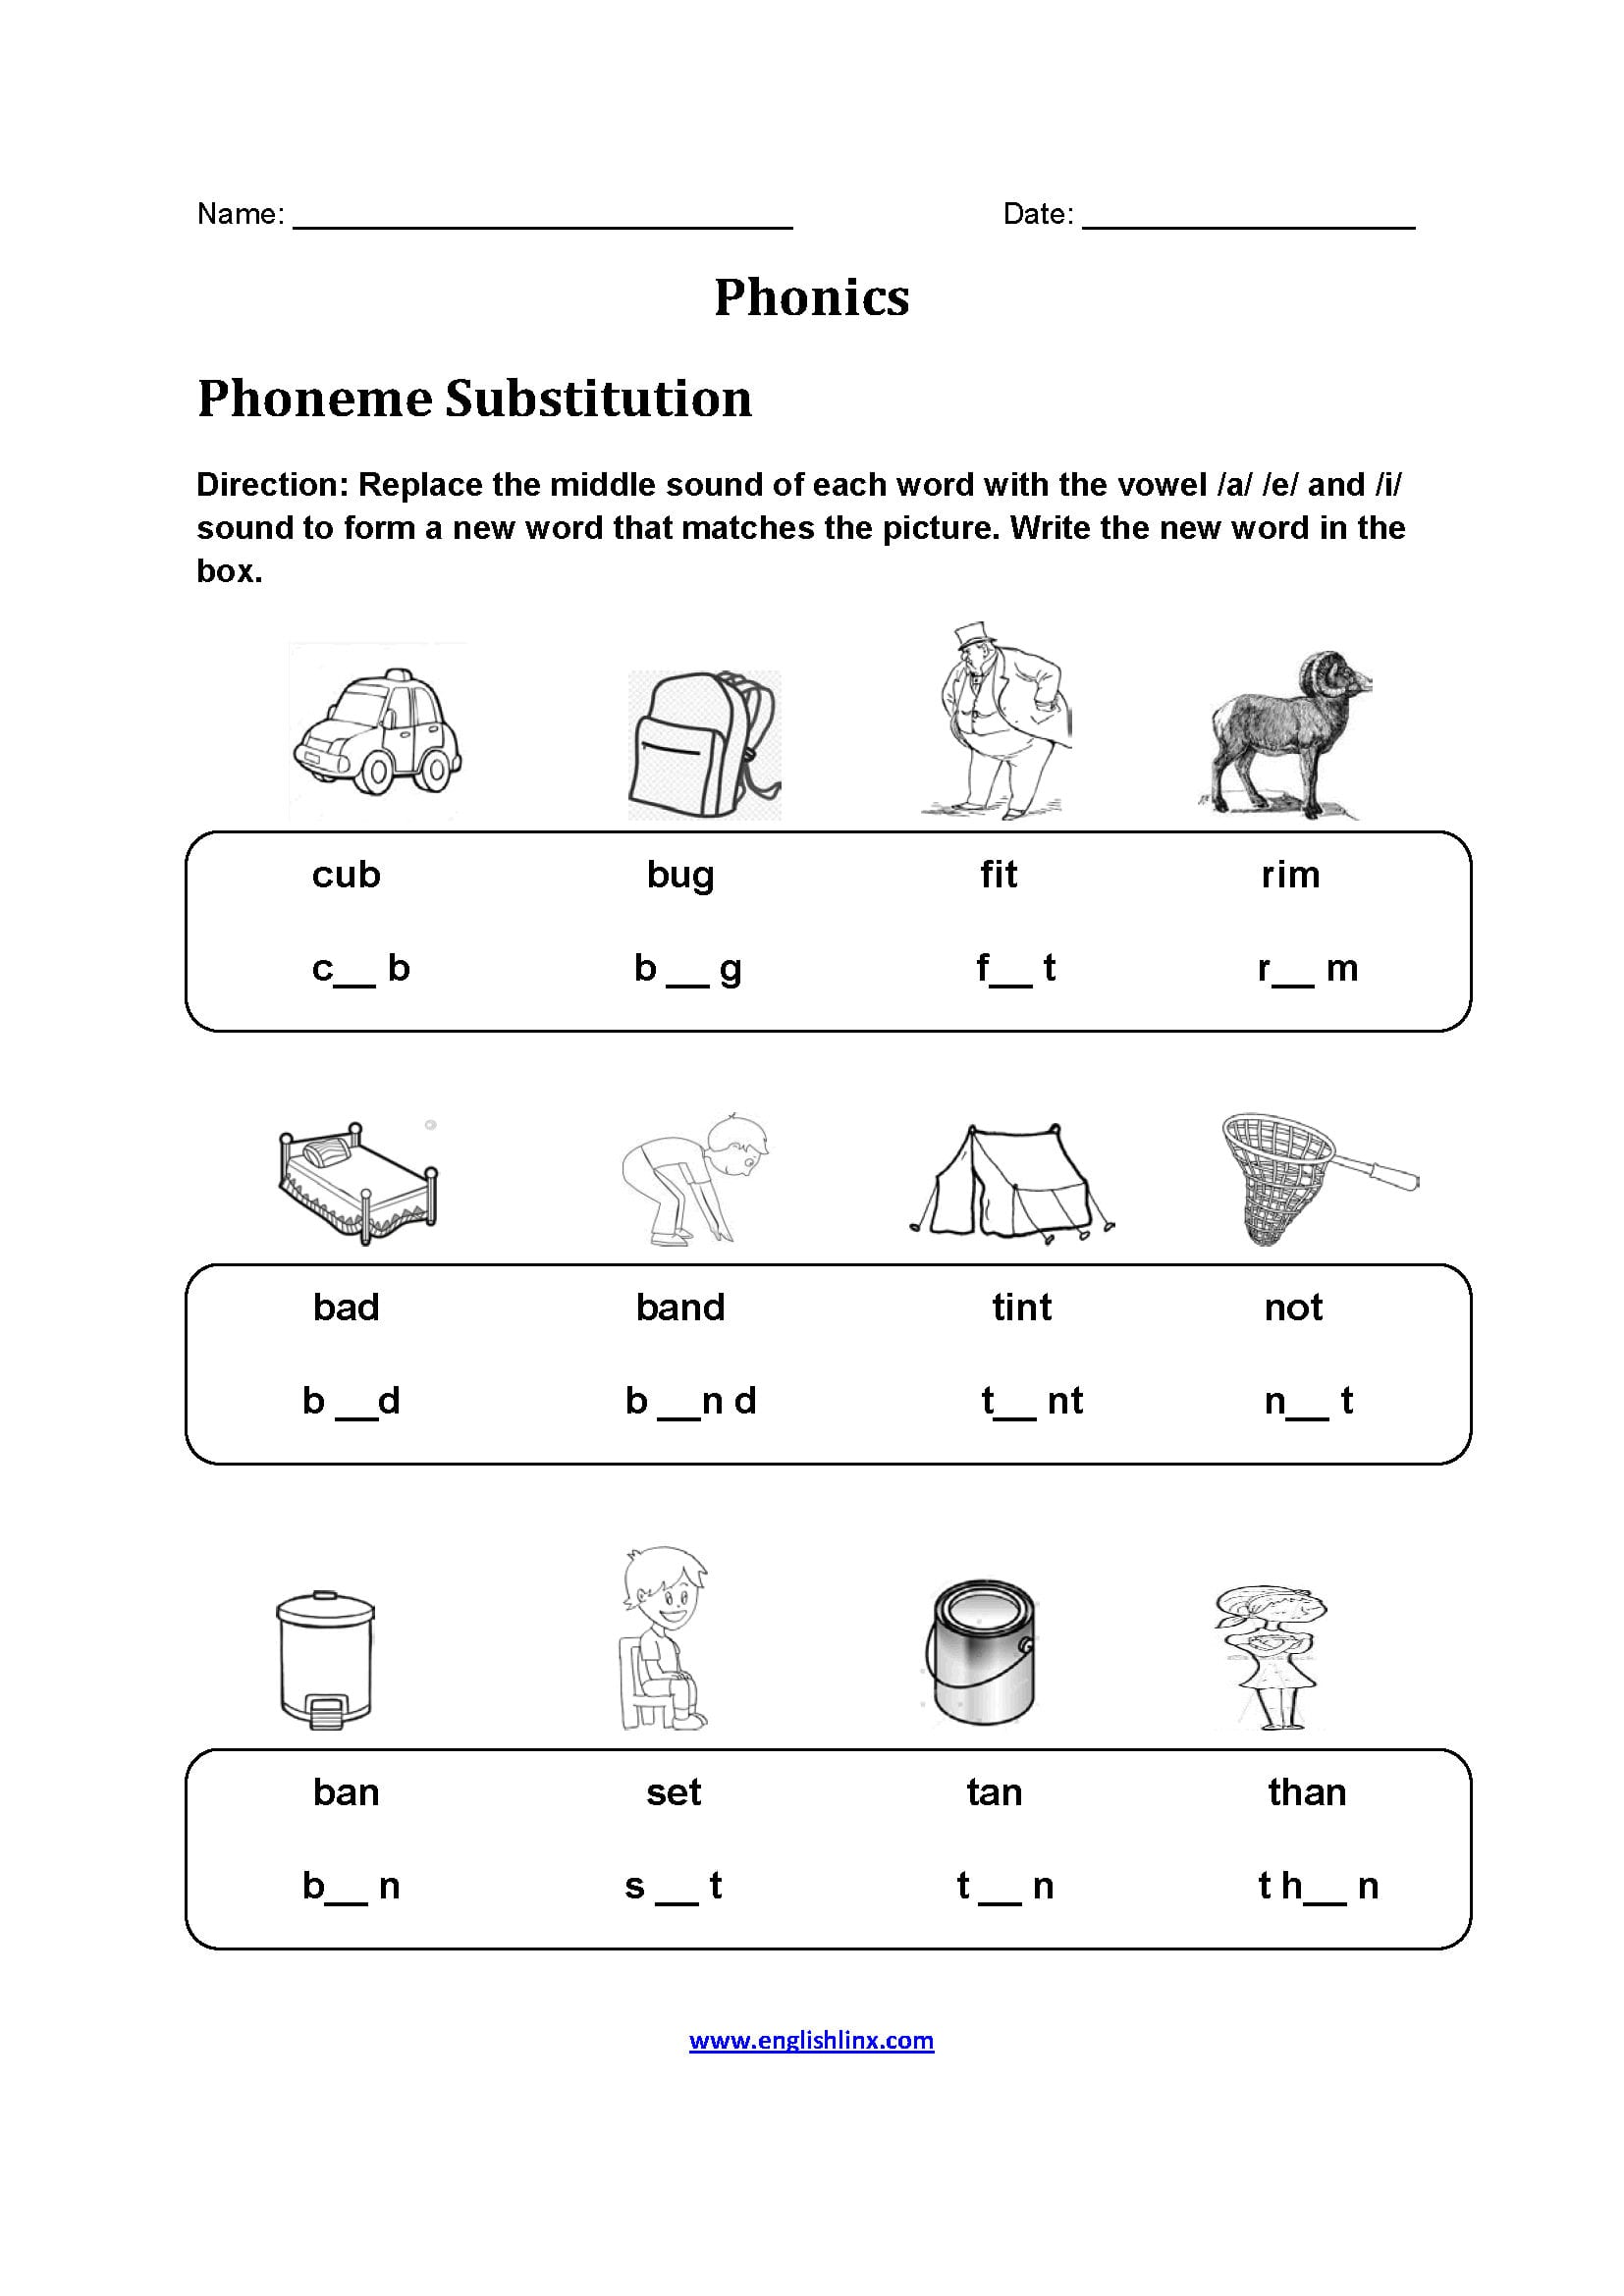 phonics-worksheets-pdf-db-excel